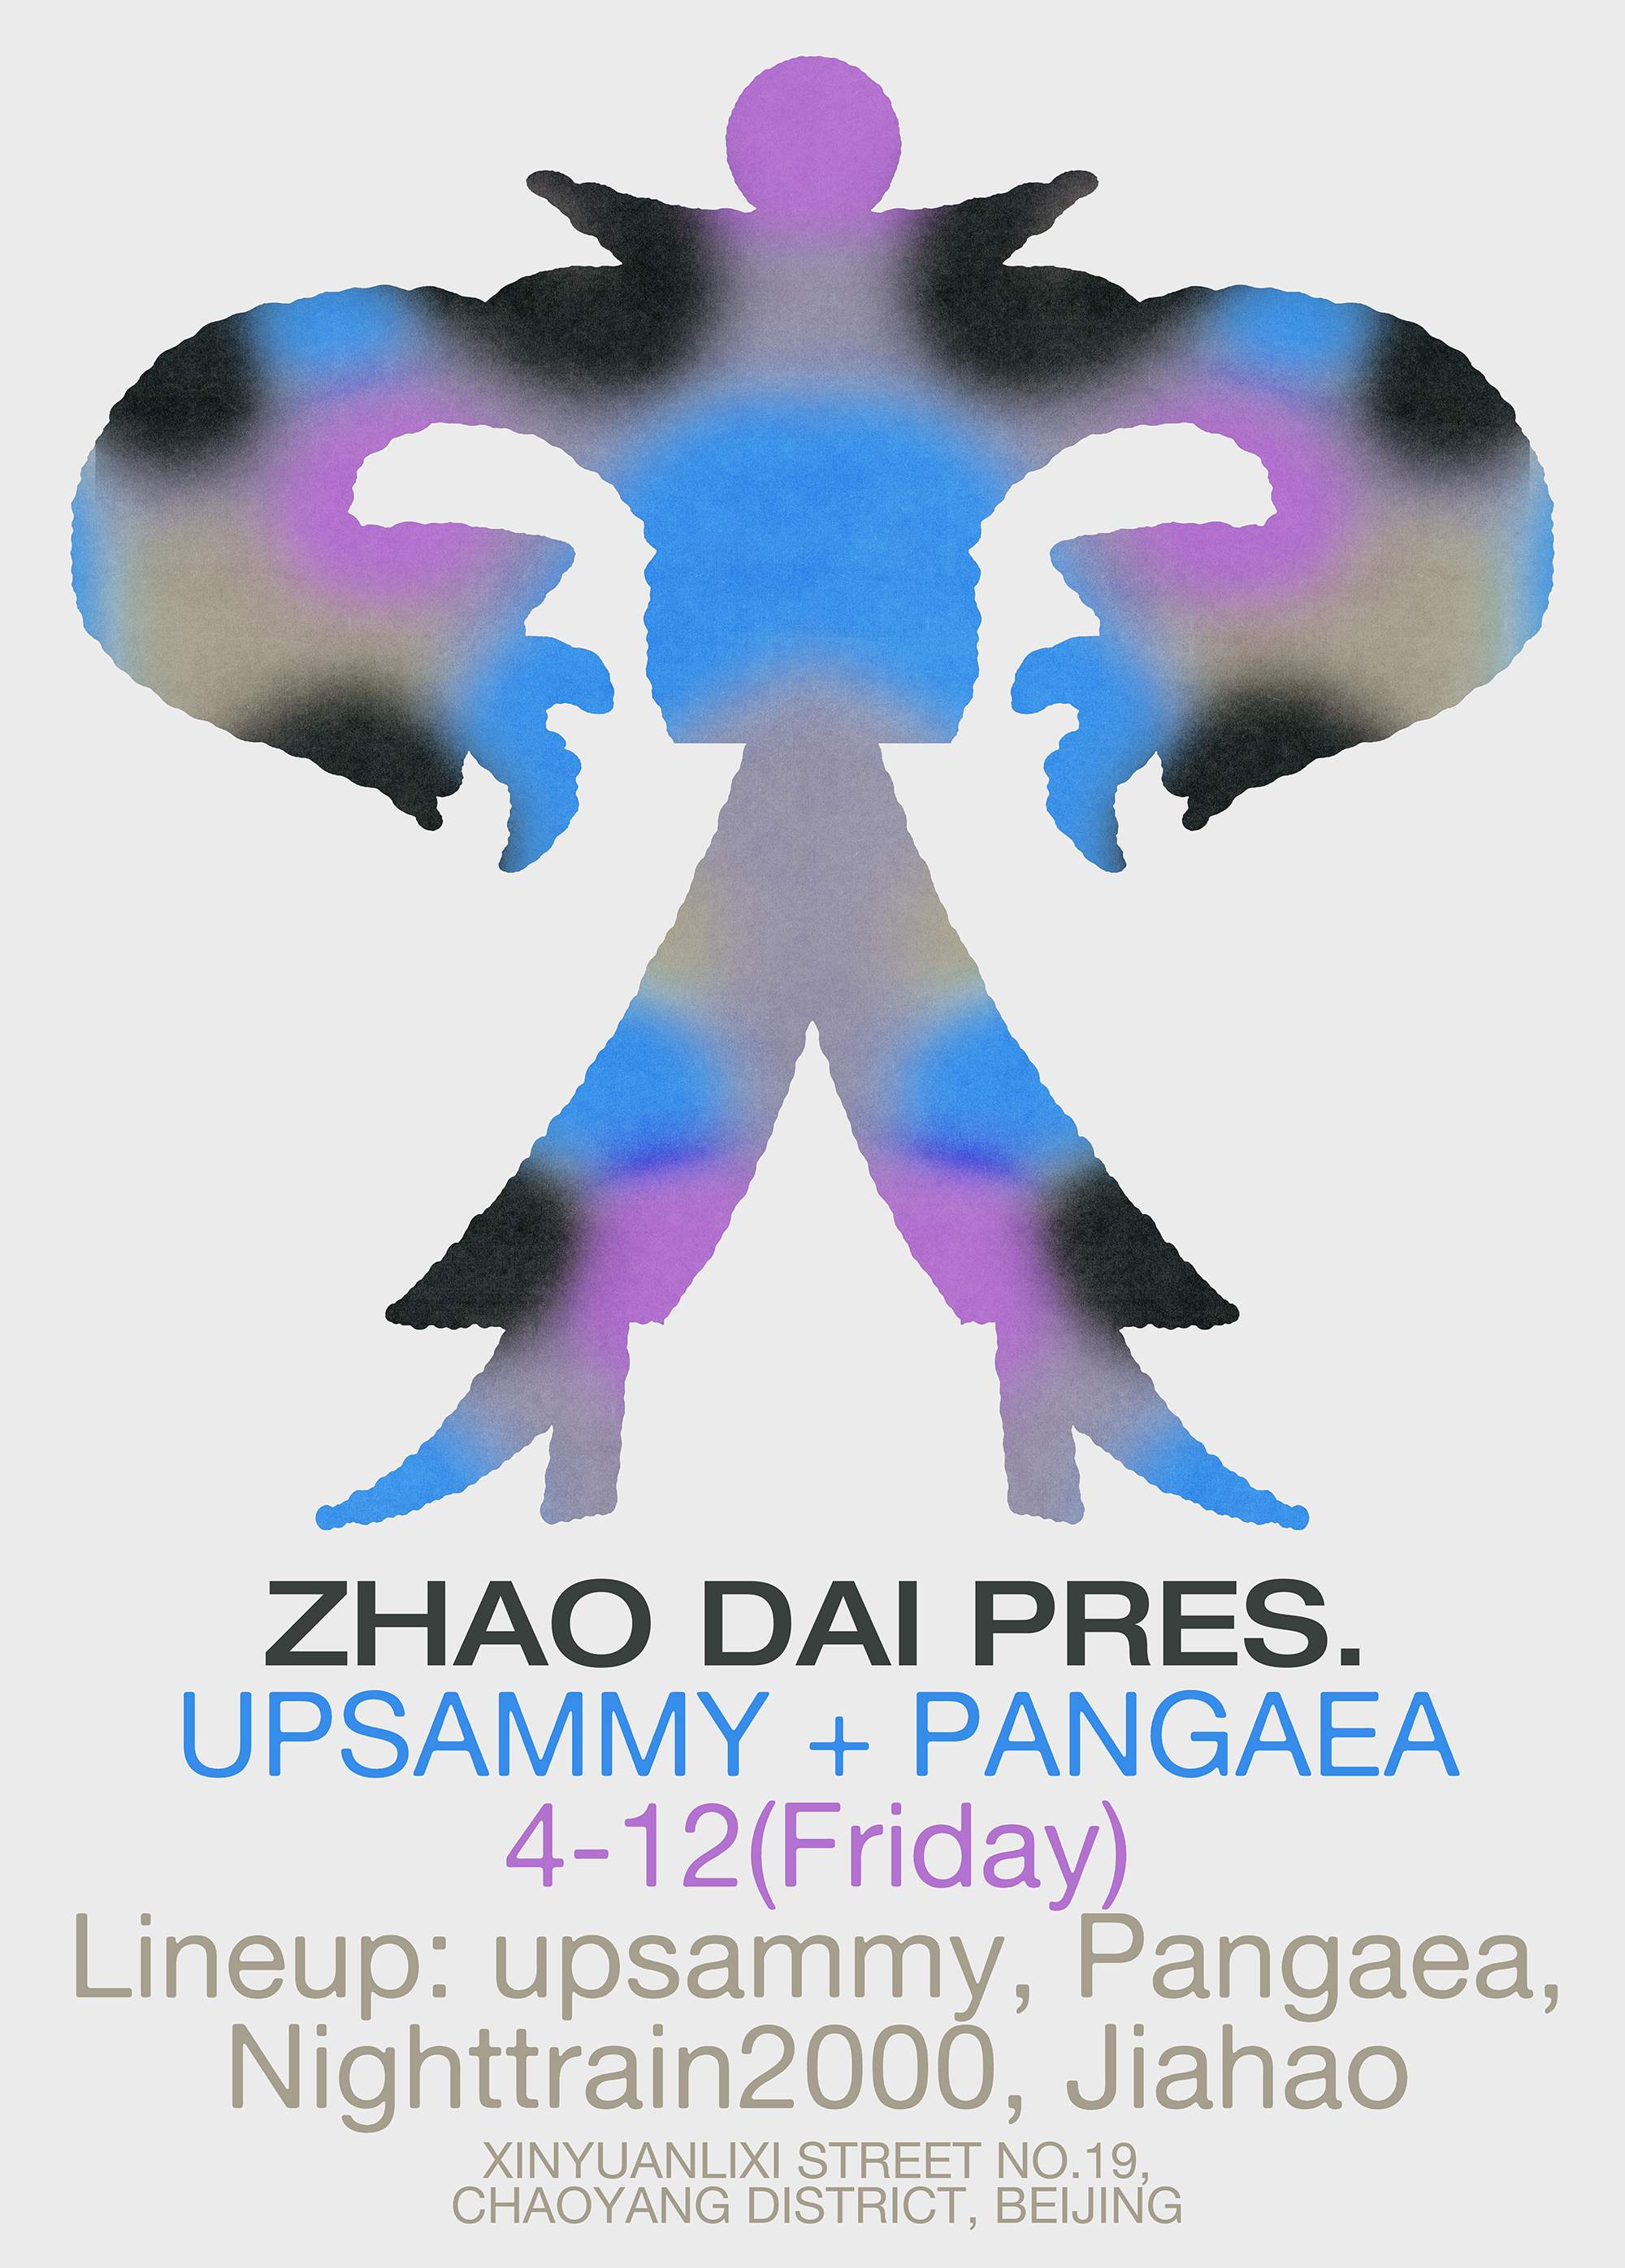 Zhao Dai pres. upsammy + Pangaea - フライヤー表